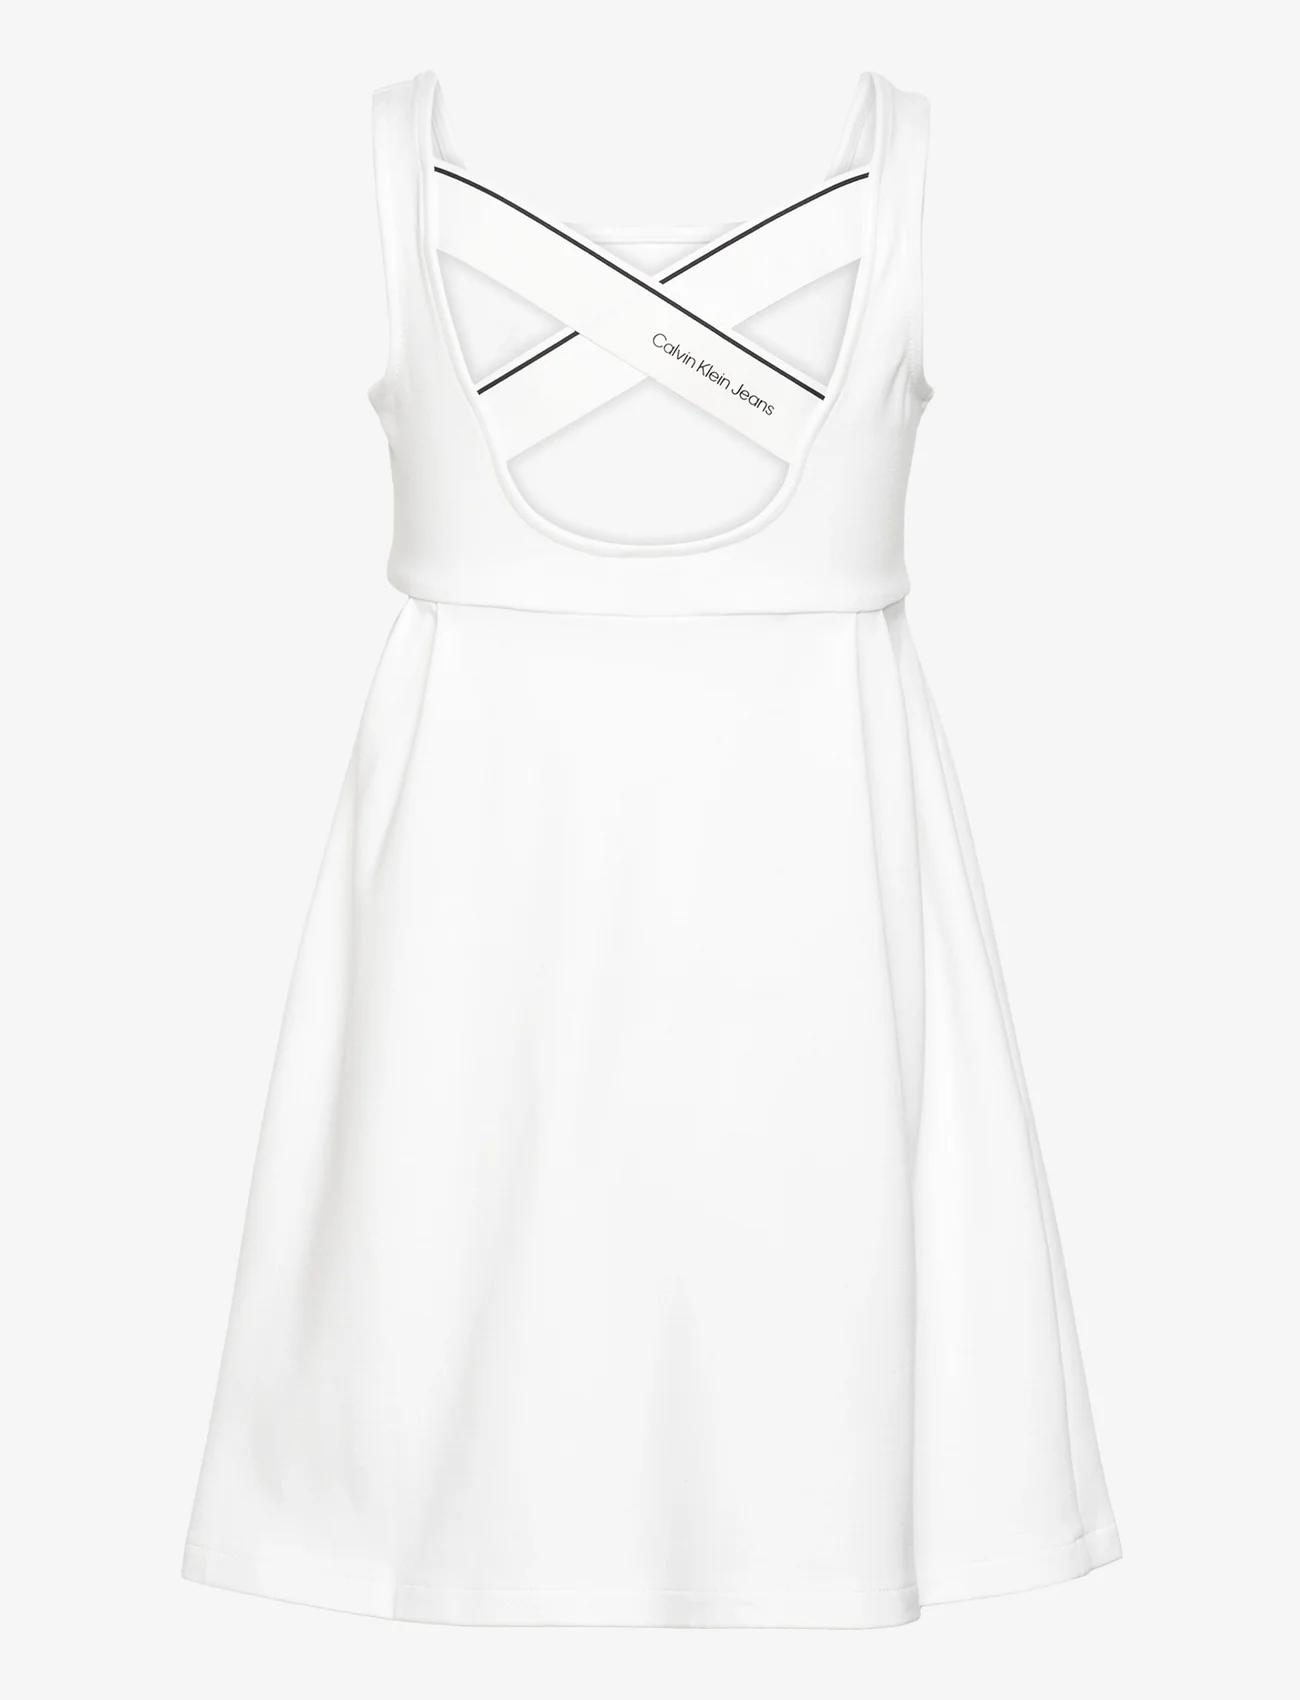 Calvin Klein - BACK LOGO TAPE FIT FLARE DRESS - sleeveless casual dresses - bright white - 1